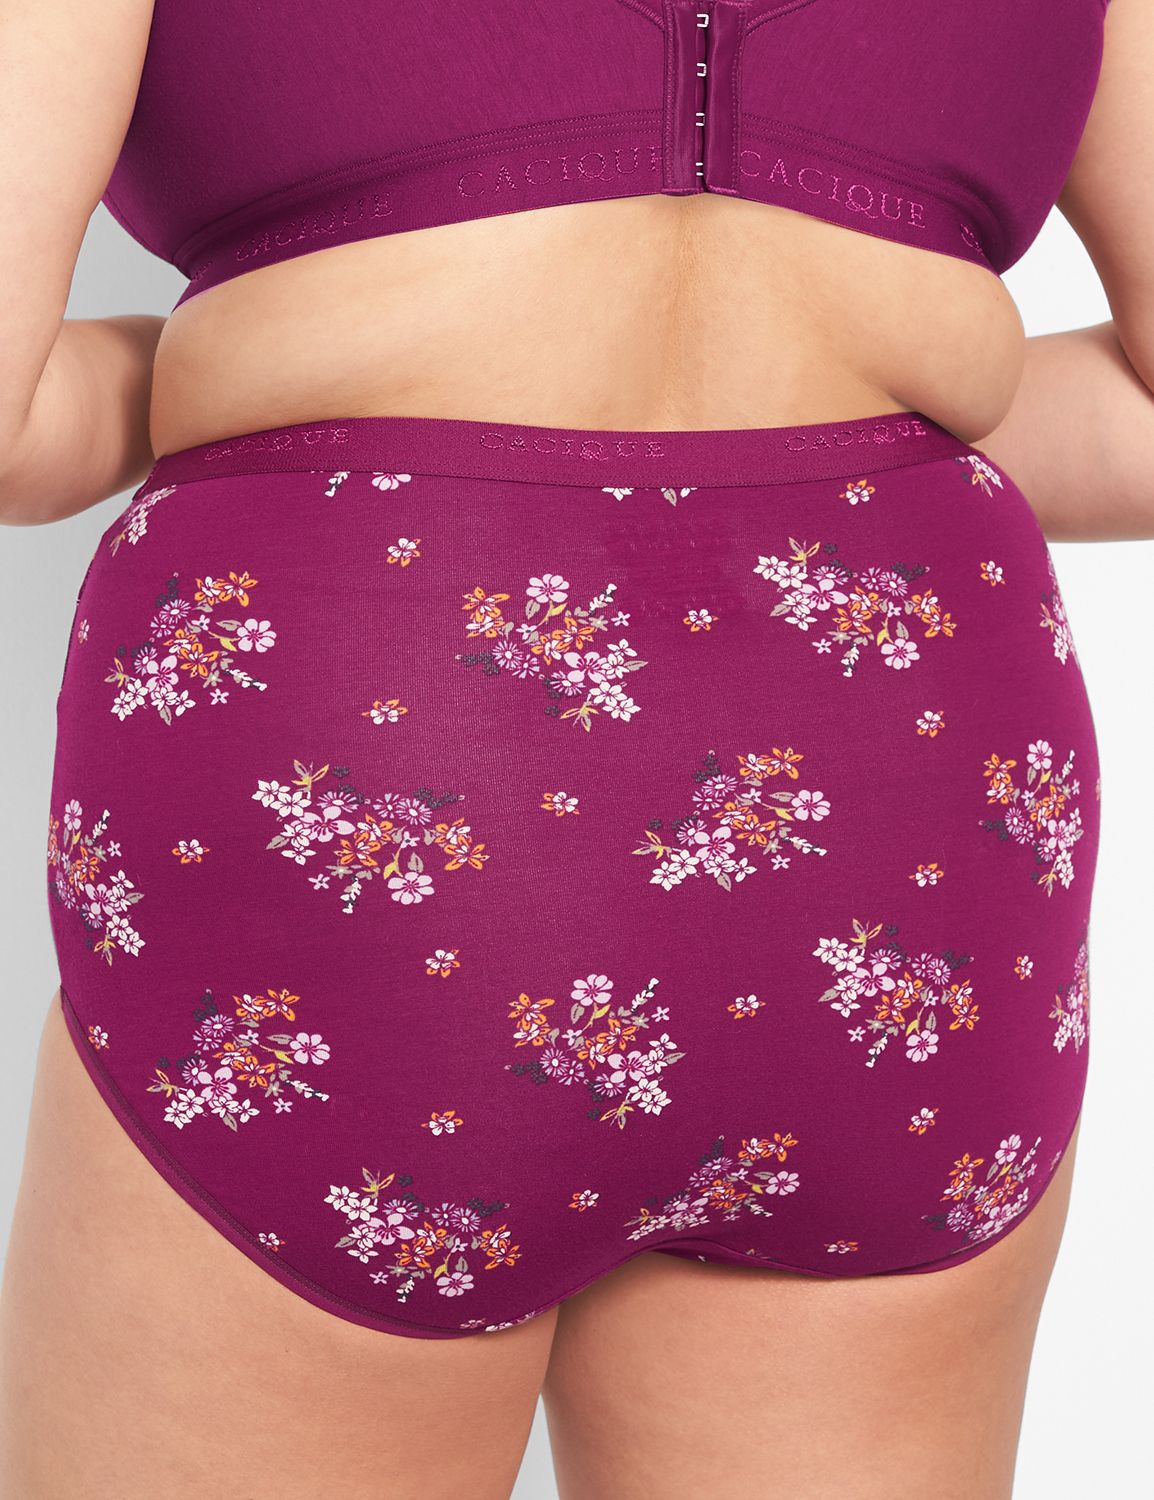 Cacique High Waist Floral Cotton 14 16 Bikini Panties Underwear